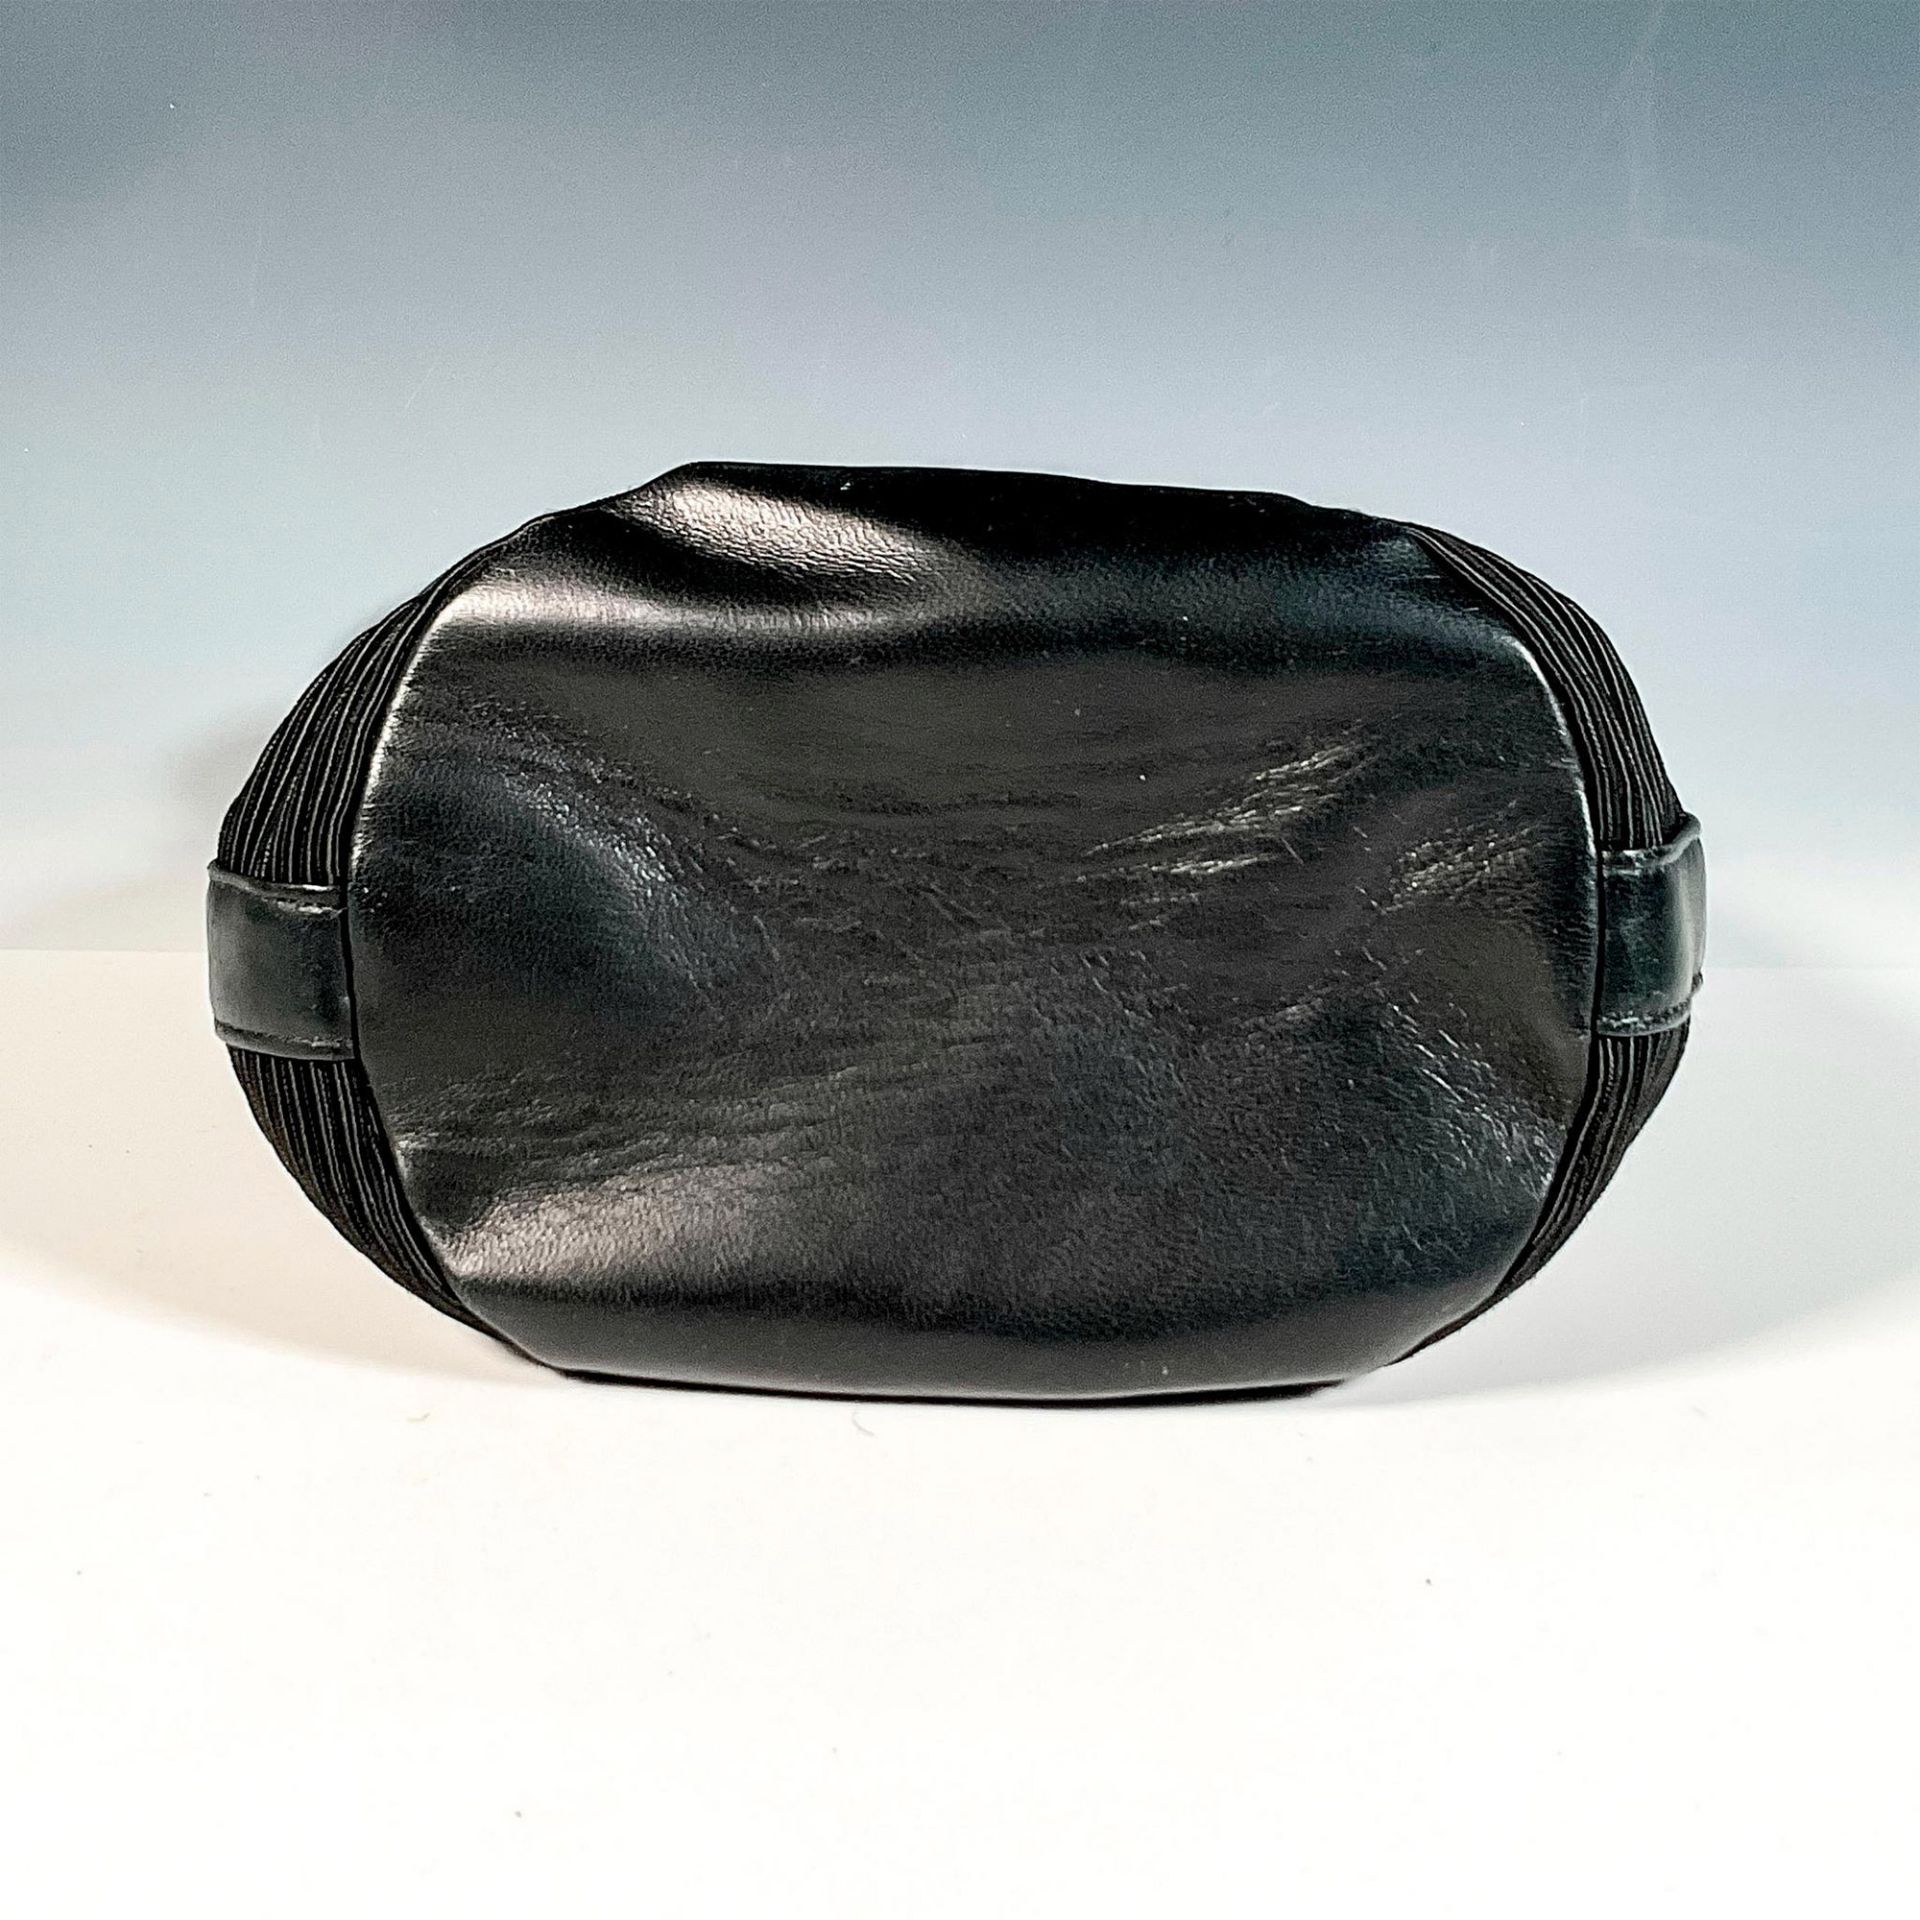 Vintage Sharif Black Fabric and Leather Handbag - Image 3 of 4